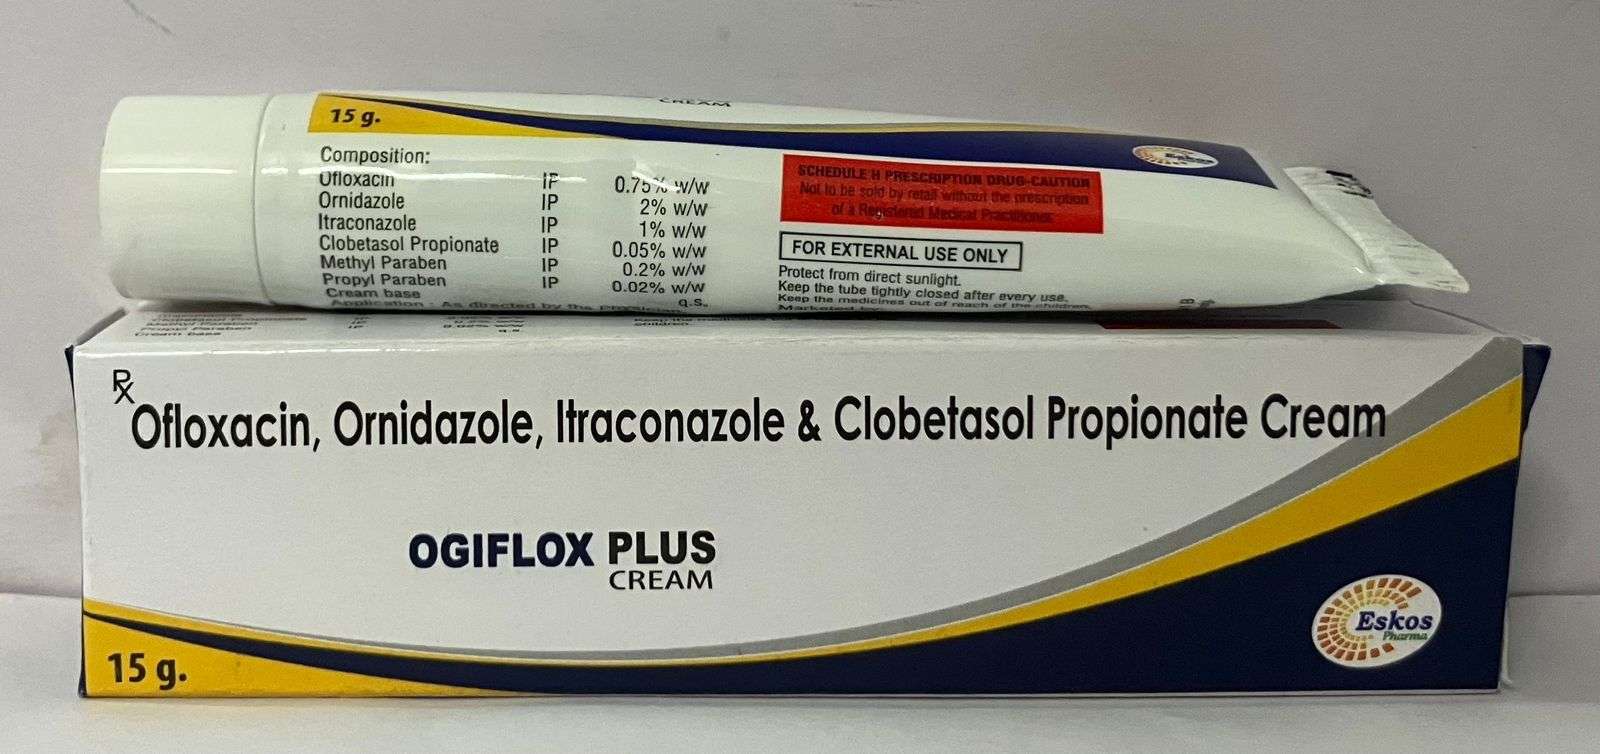 ofloxacin + ornidazole + itraconazole & clobetasol propionate cream